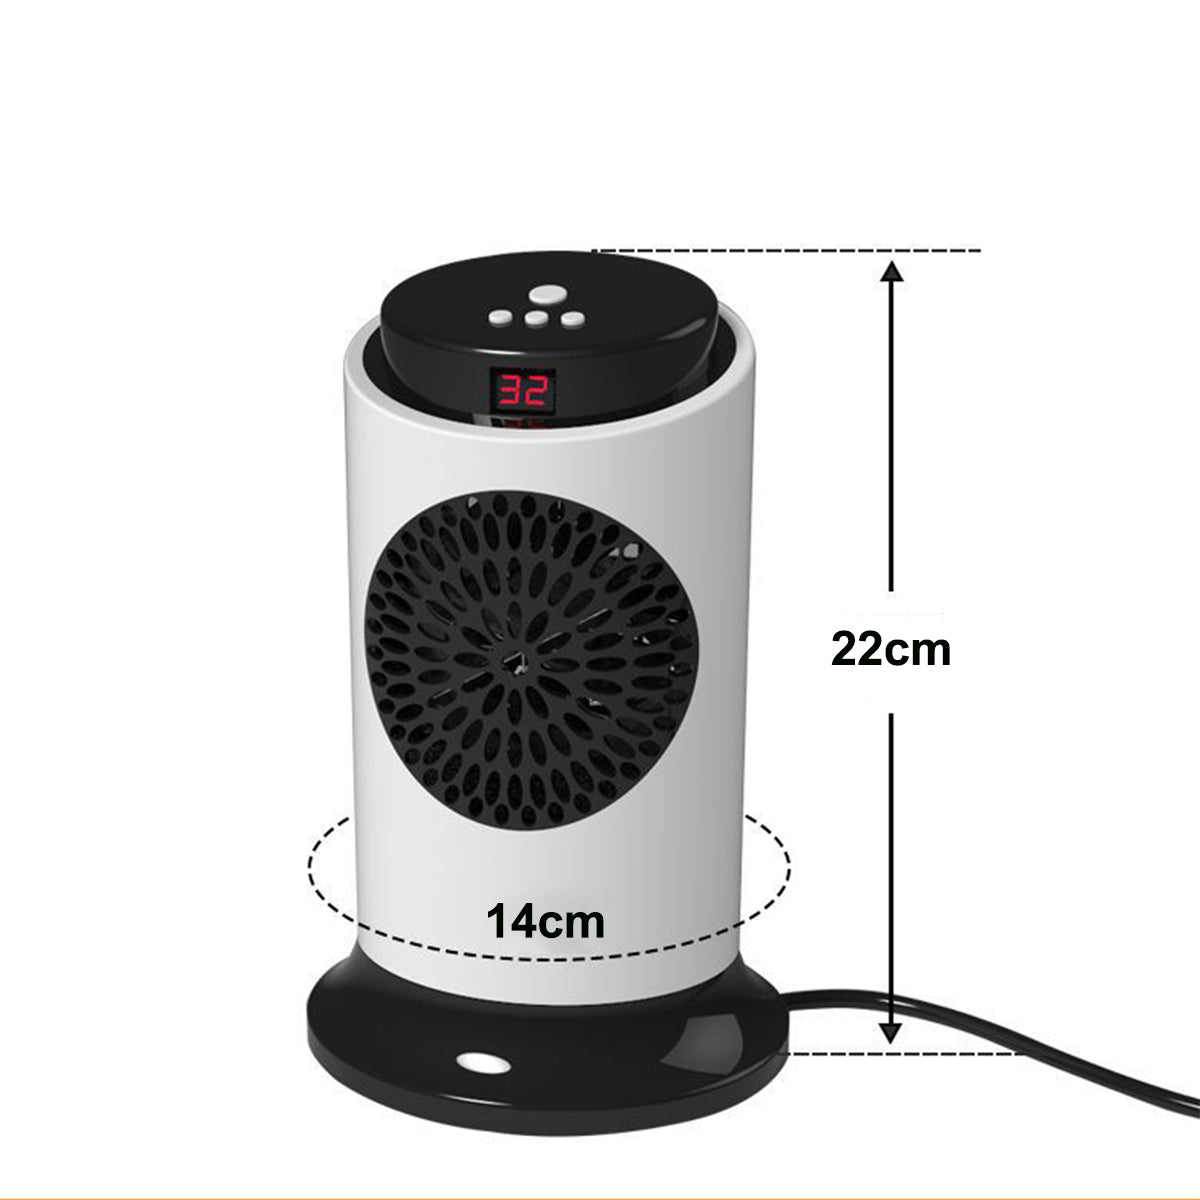 Portable Dual Use Ceramic Power Electric Heater & Fan - MomProStore 